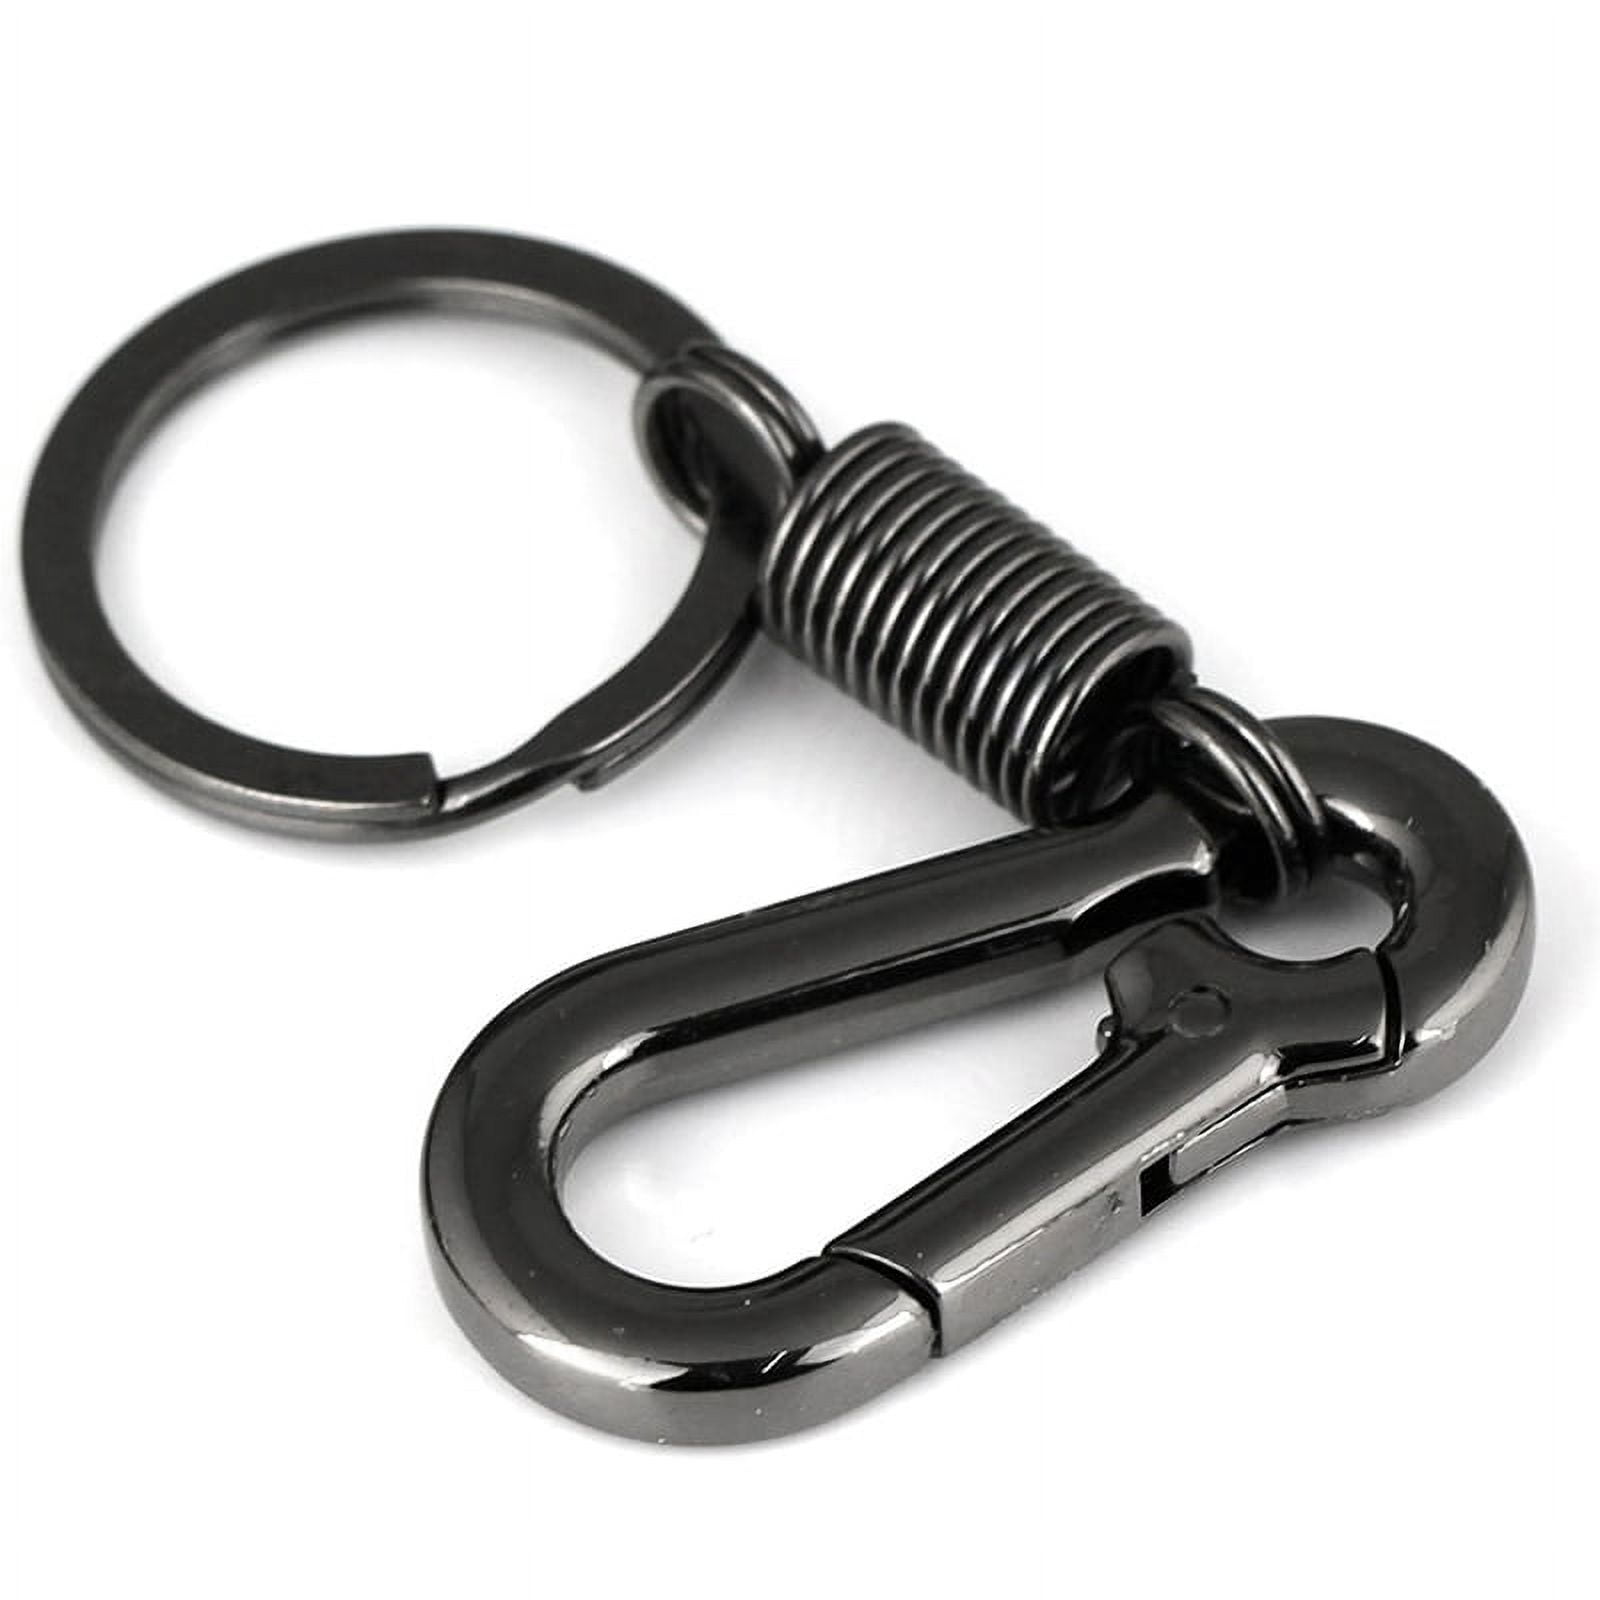 Sturdy Carabiner Key Chain Key Ring Polished Key Chain Spring Key Chain  Business Waist Key Chain, Black 